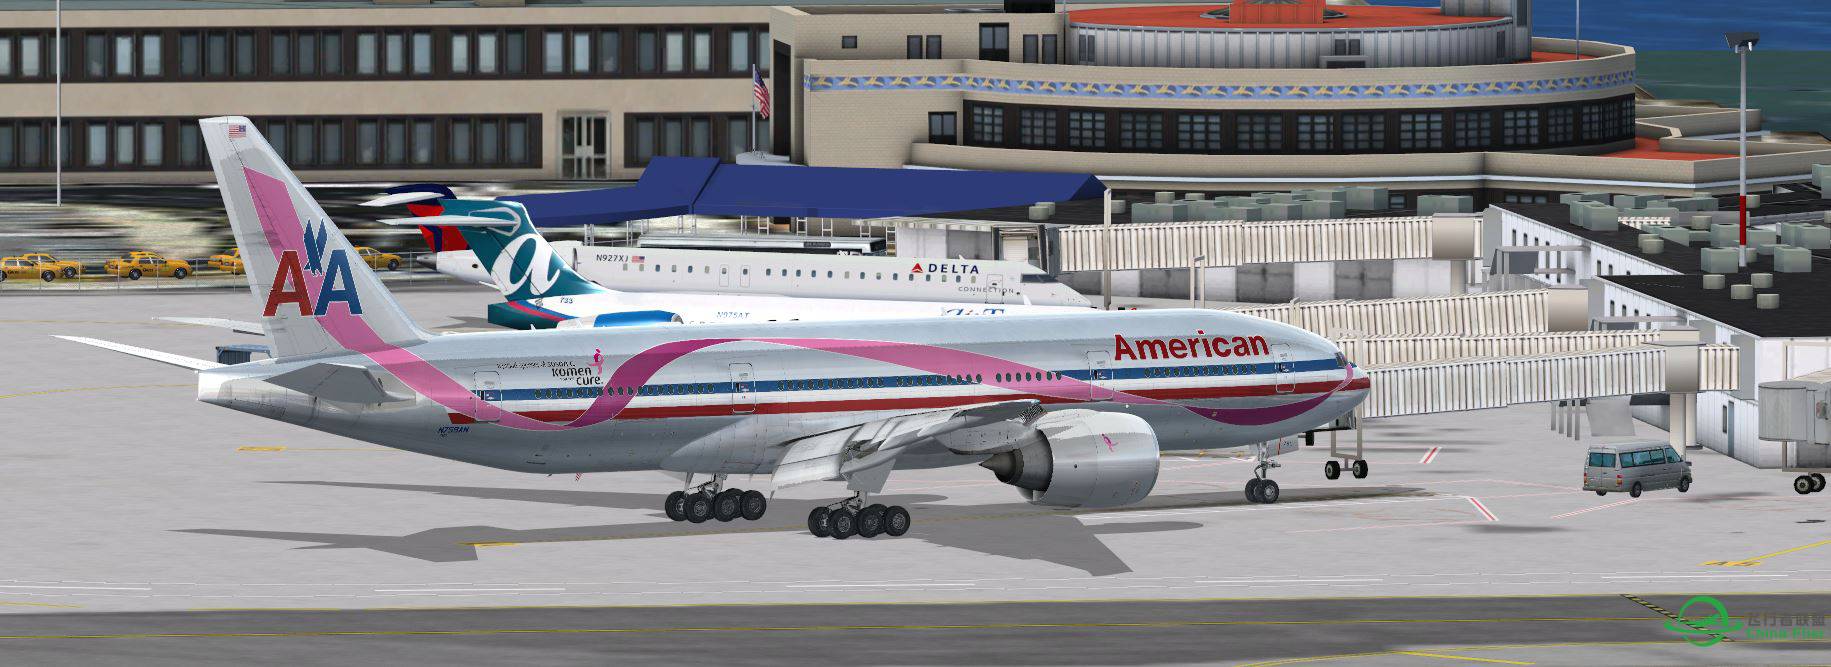 B777 American Airline-2285 